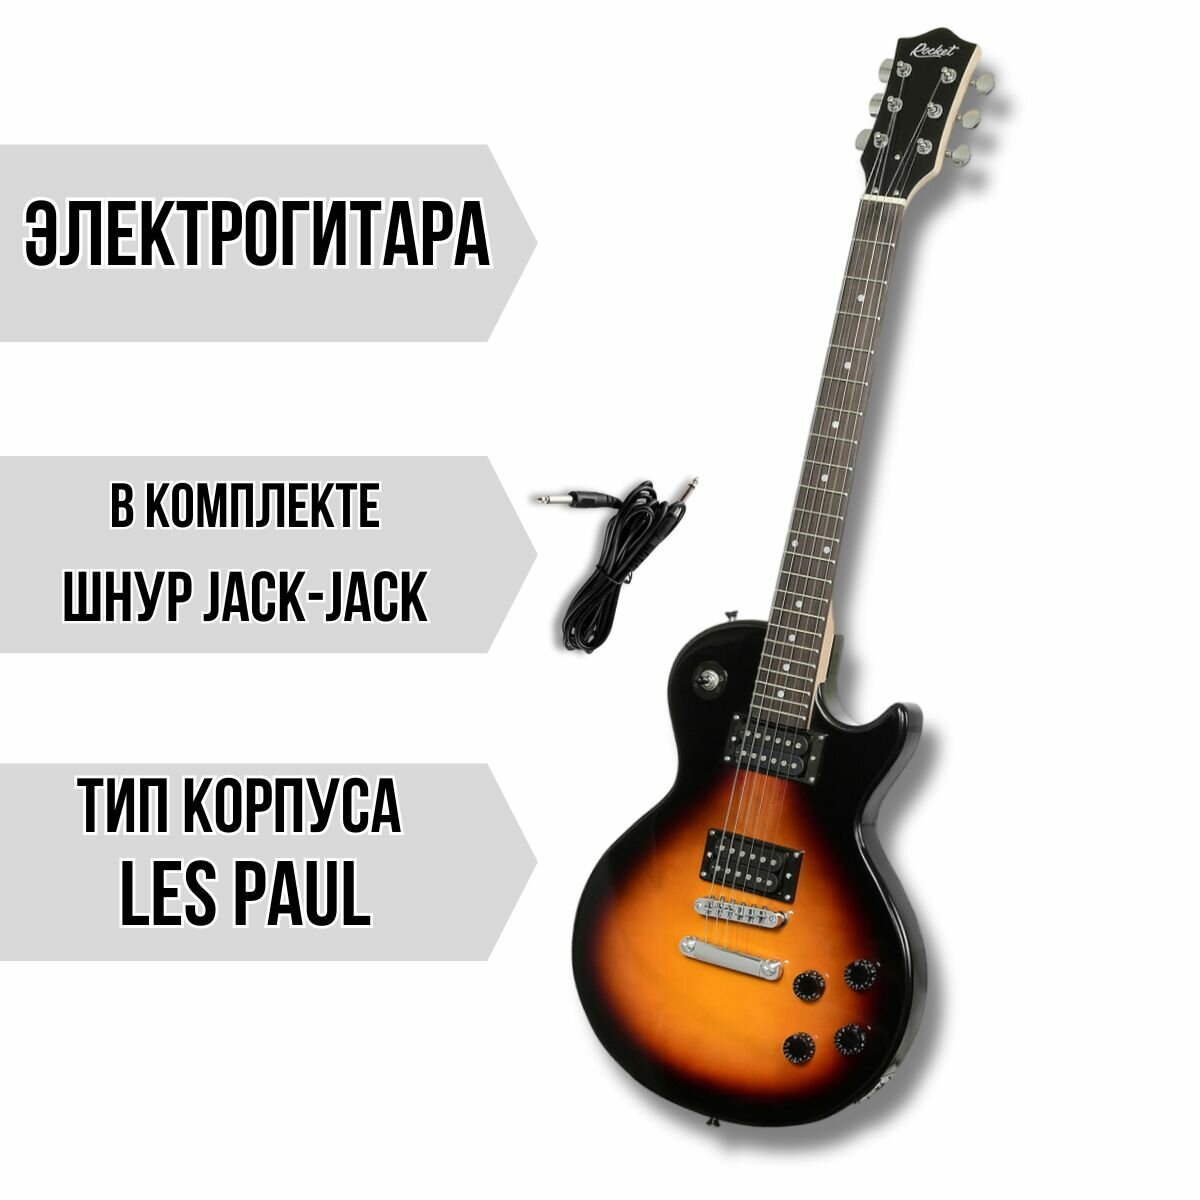 Электрогитара ROCKET LP-1 SB Les Paul H-H цвет санберст в комплекте шнур Jack-Jack